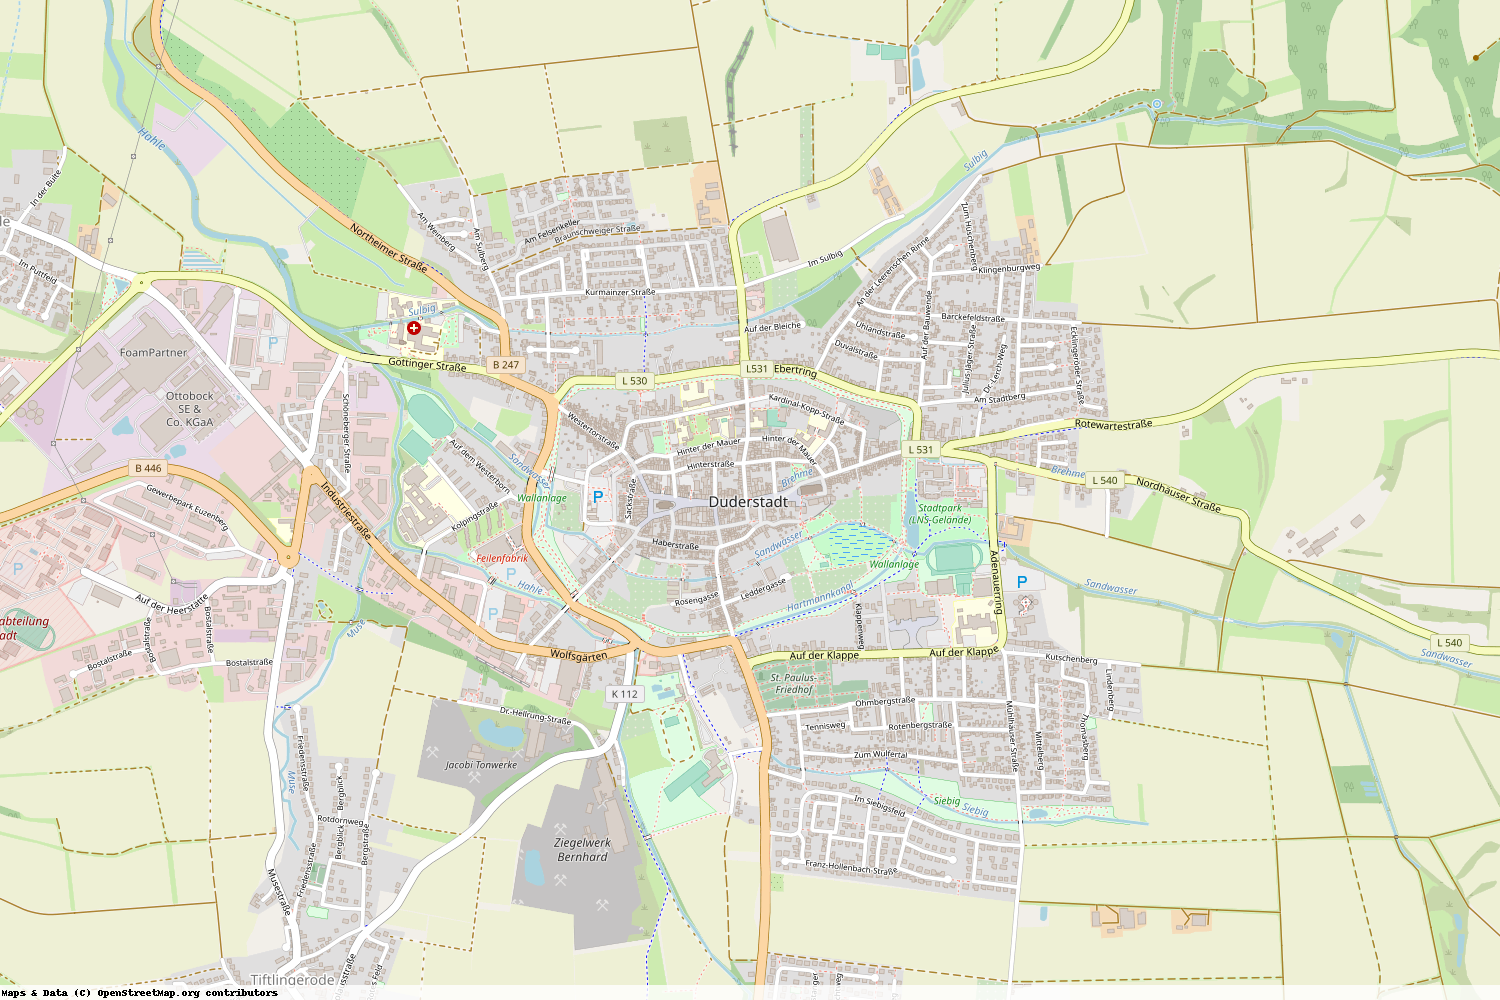 Ist gerade Stromausfall in Niedersachsen - Göttingen - Duderstadt?